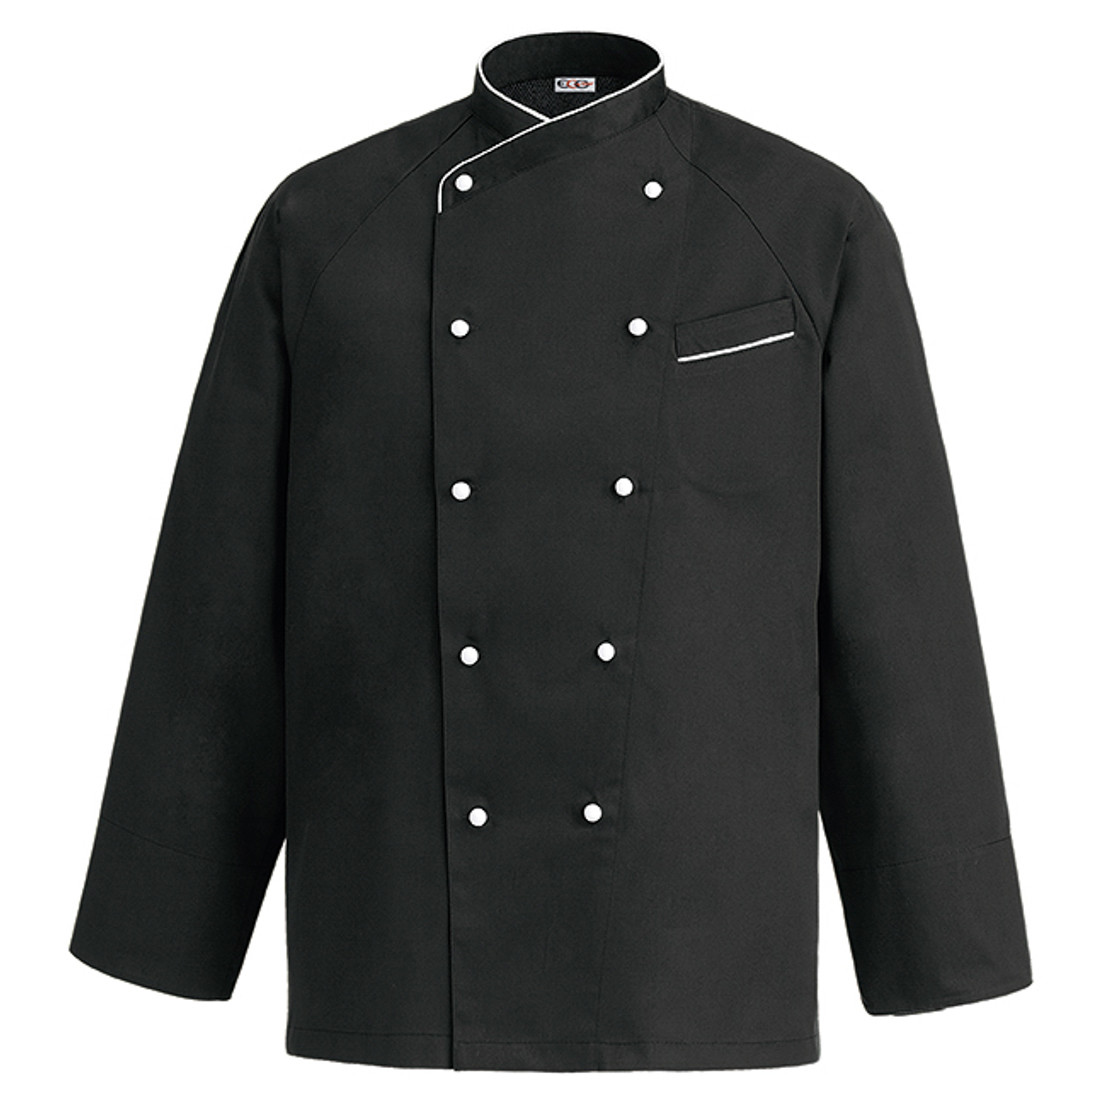 Richard Chef's Jacket, 65% polyester/35% cotton - Safetywear